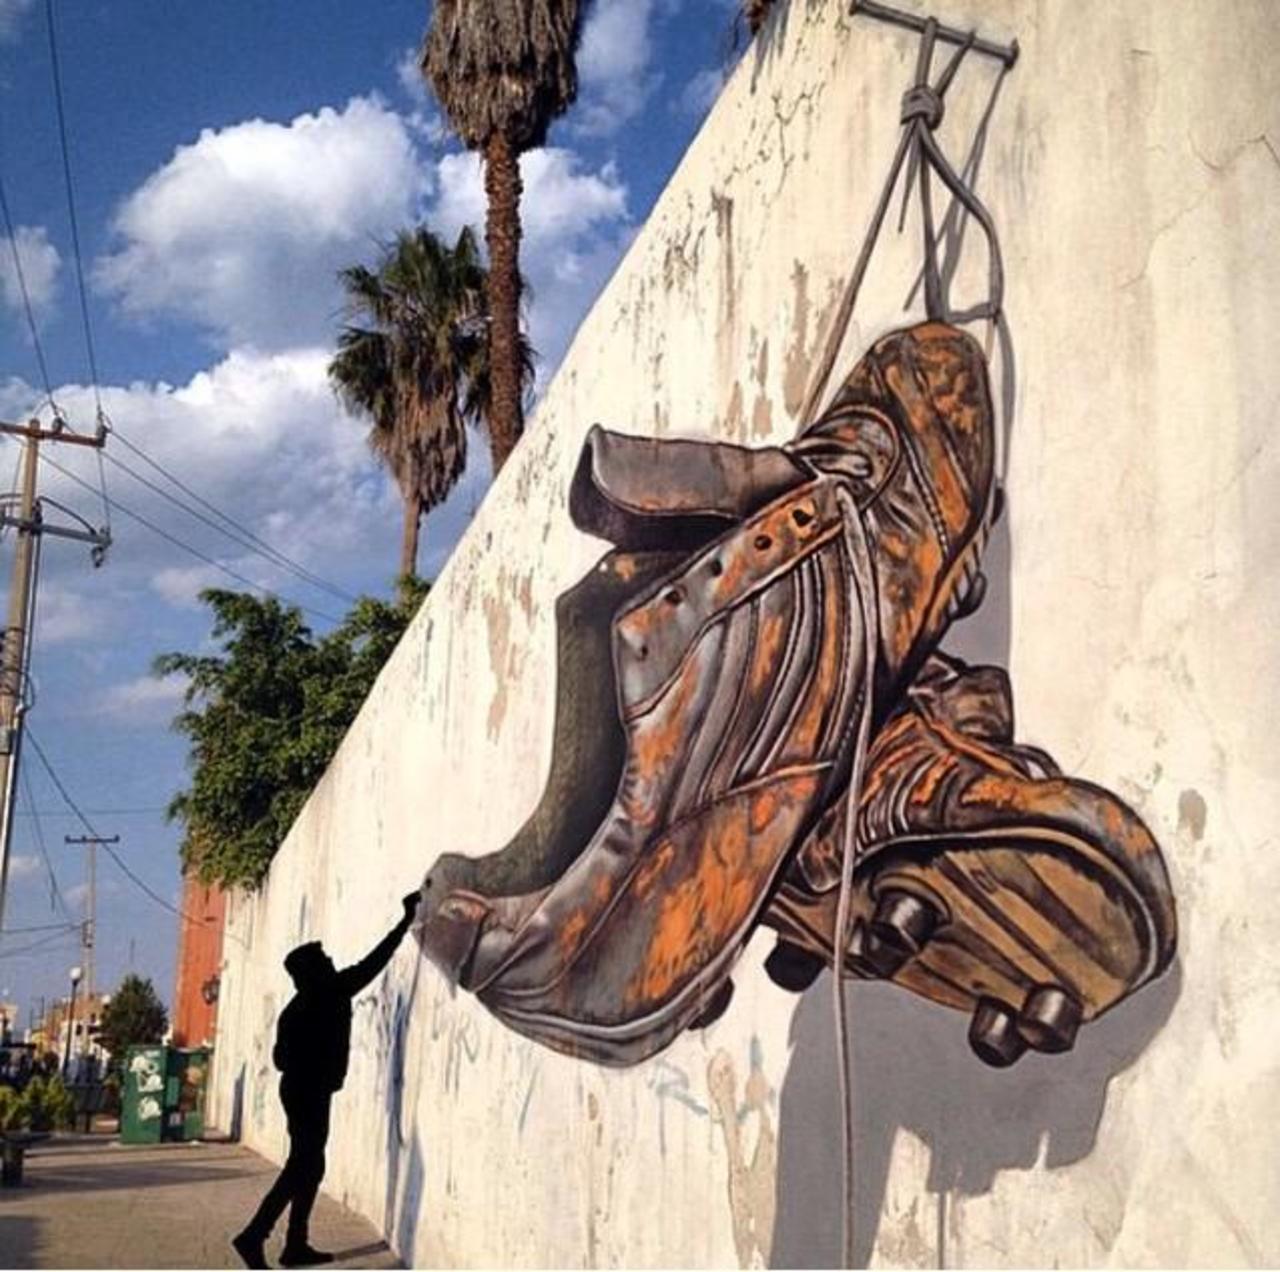 Sistemas4s: Awesome anamorphic 3D Street Art by Juandres Vera 

#art #graffiti #mural #streetart http://t.co/ou0GJ5S8jk